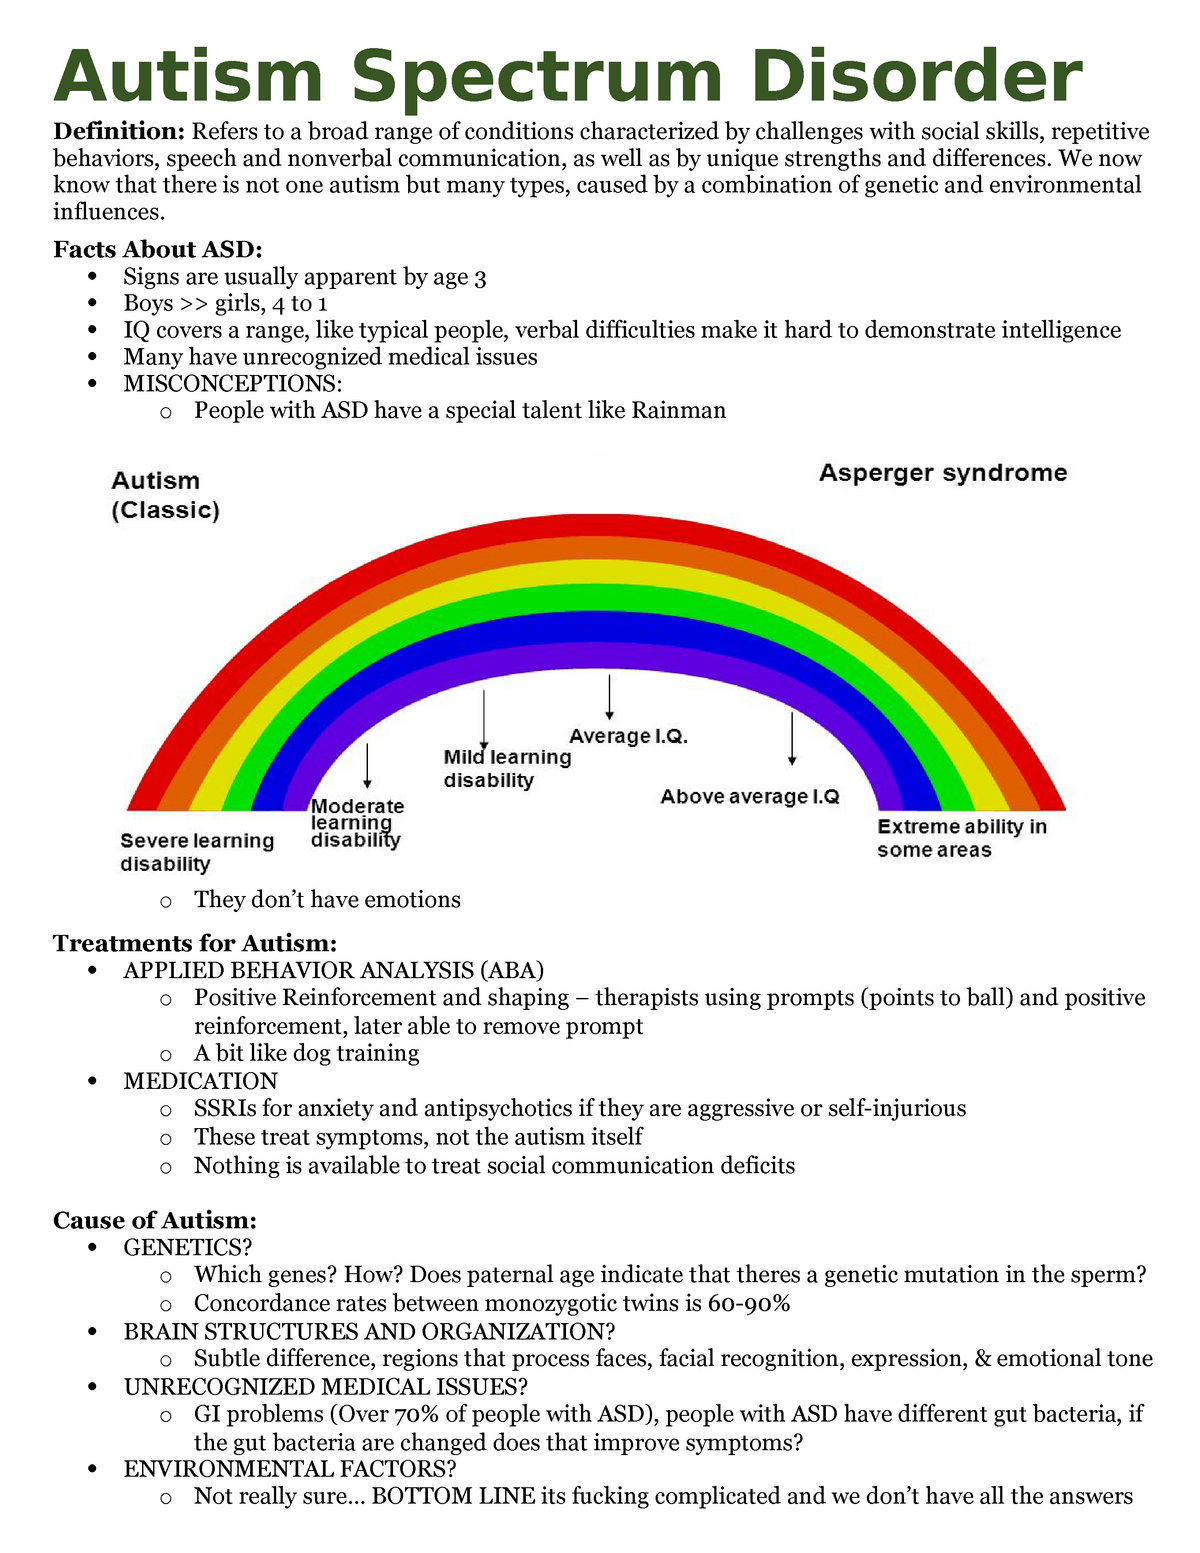 Autism Spectrum Disorder Overview Autism Spectrum Disorder ...